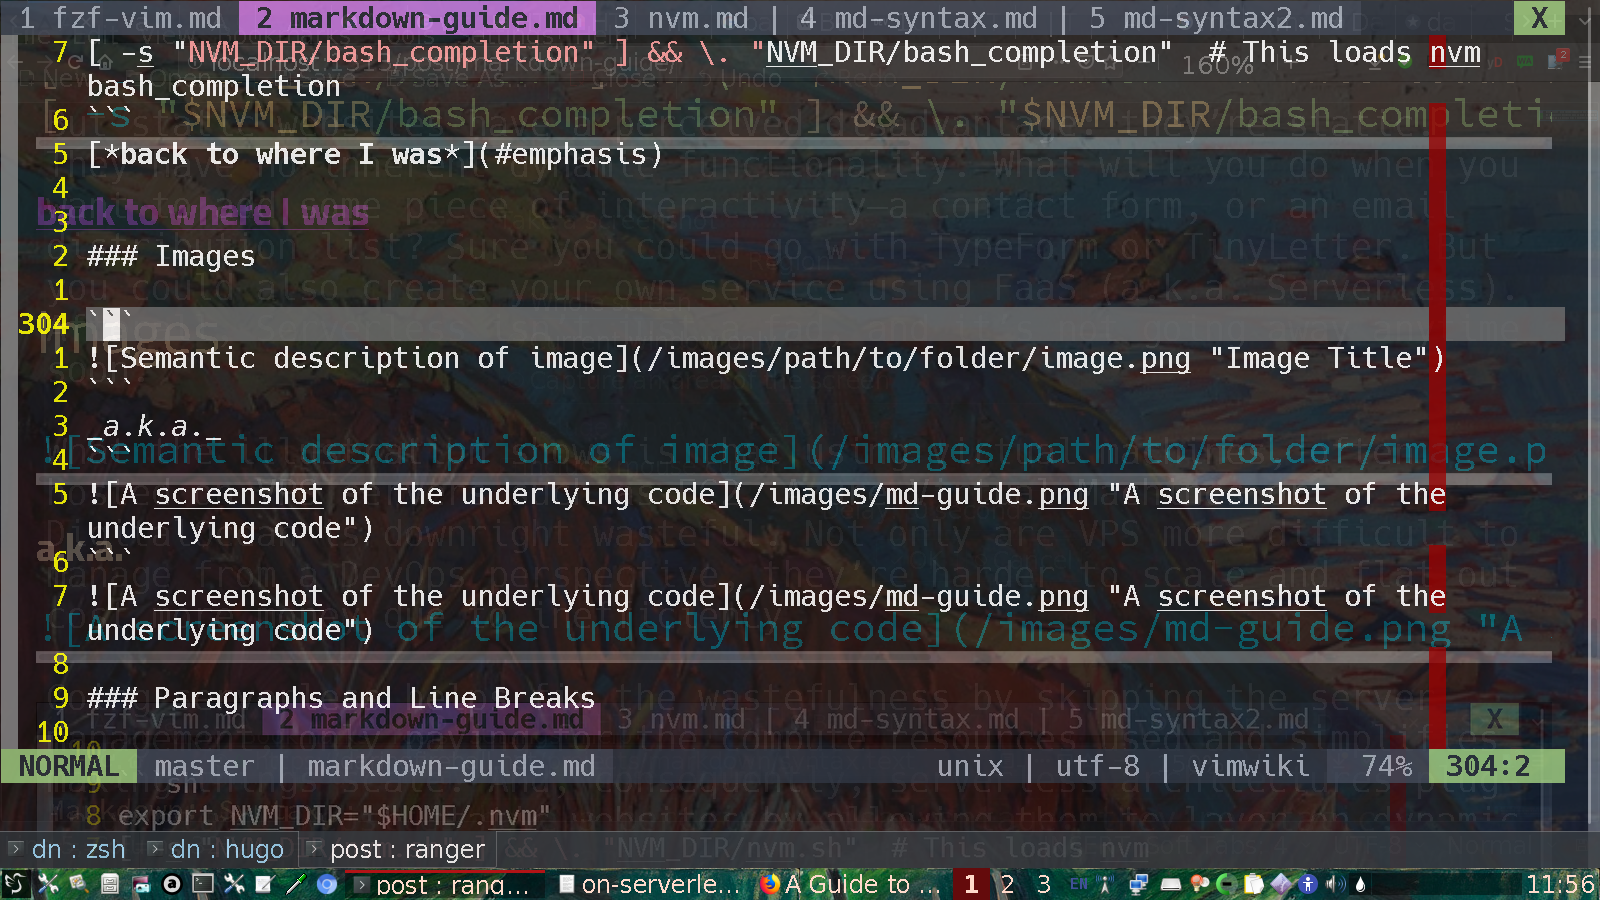 A screenshot of the underlying code